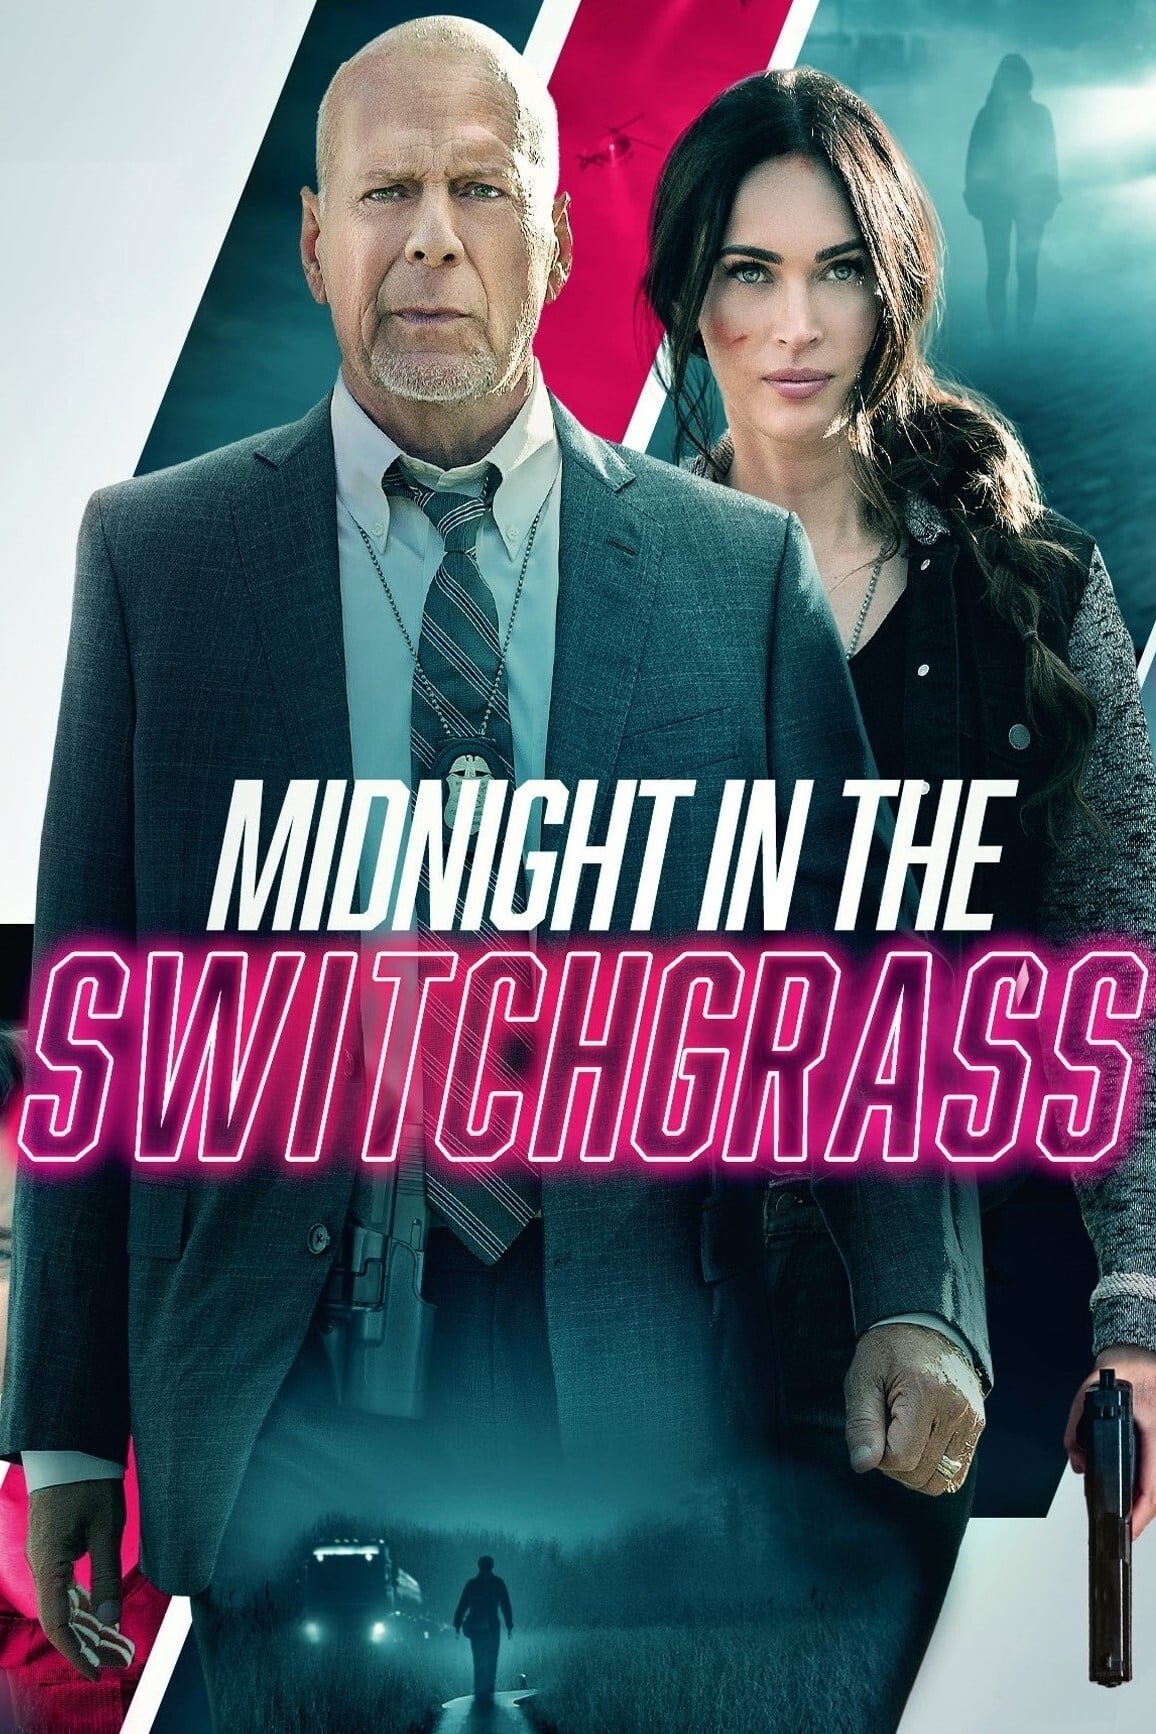 Medianoche en el Switchgrass (2021) HD 1080p Latino